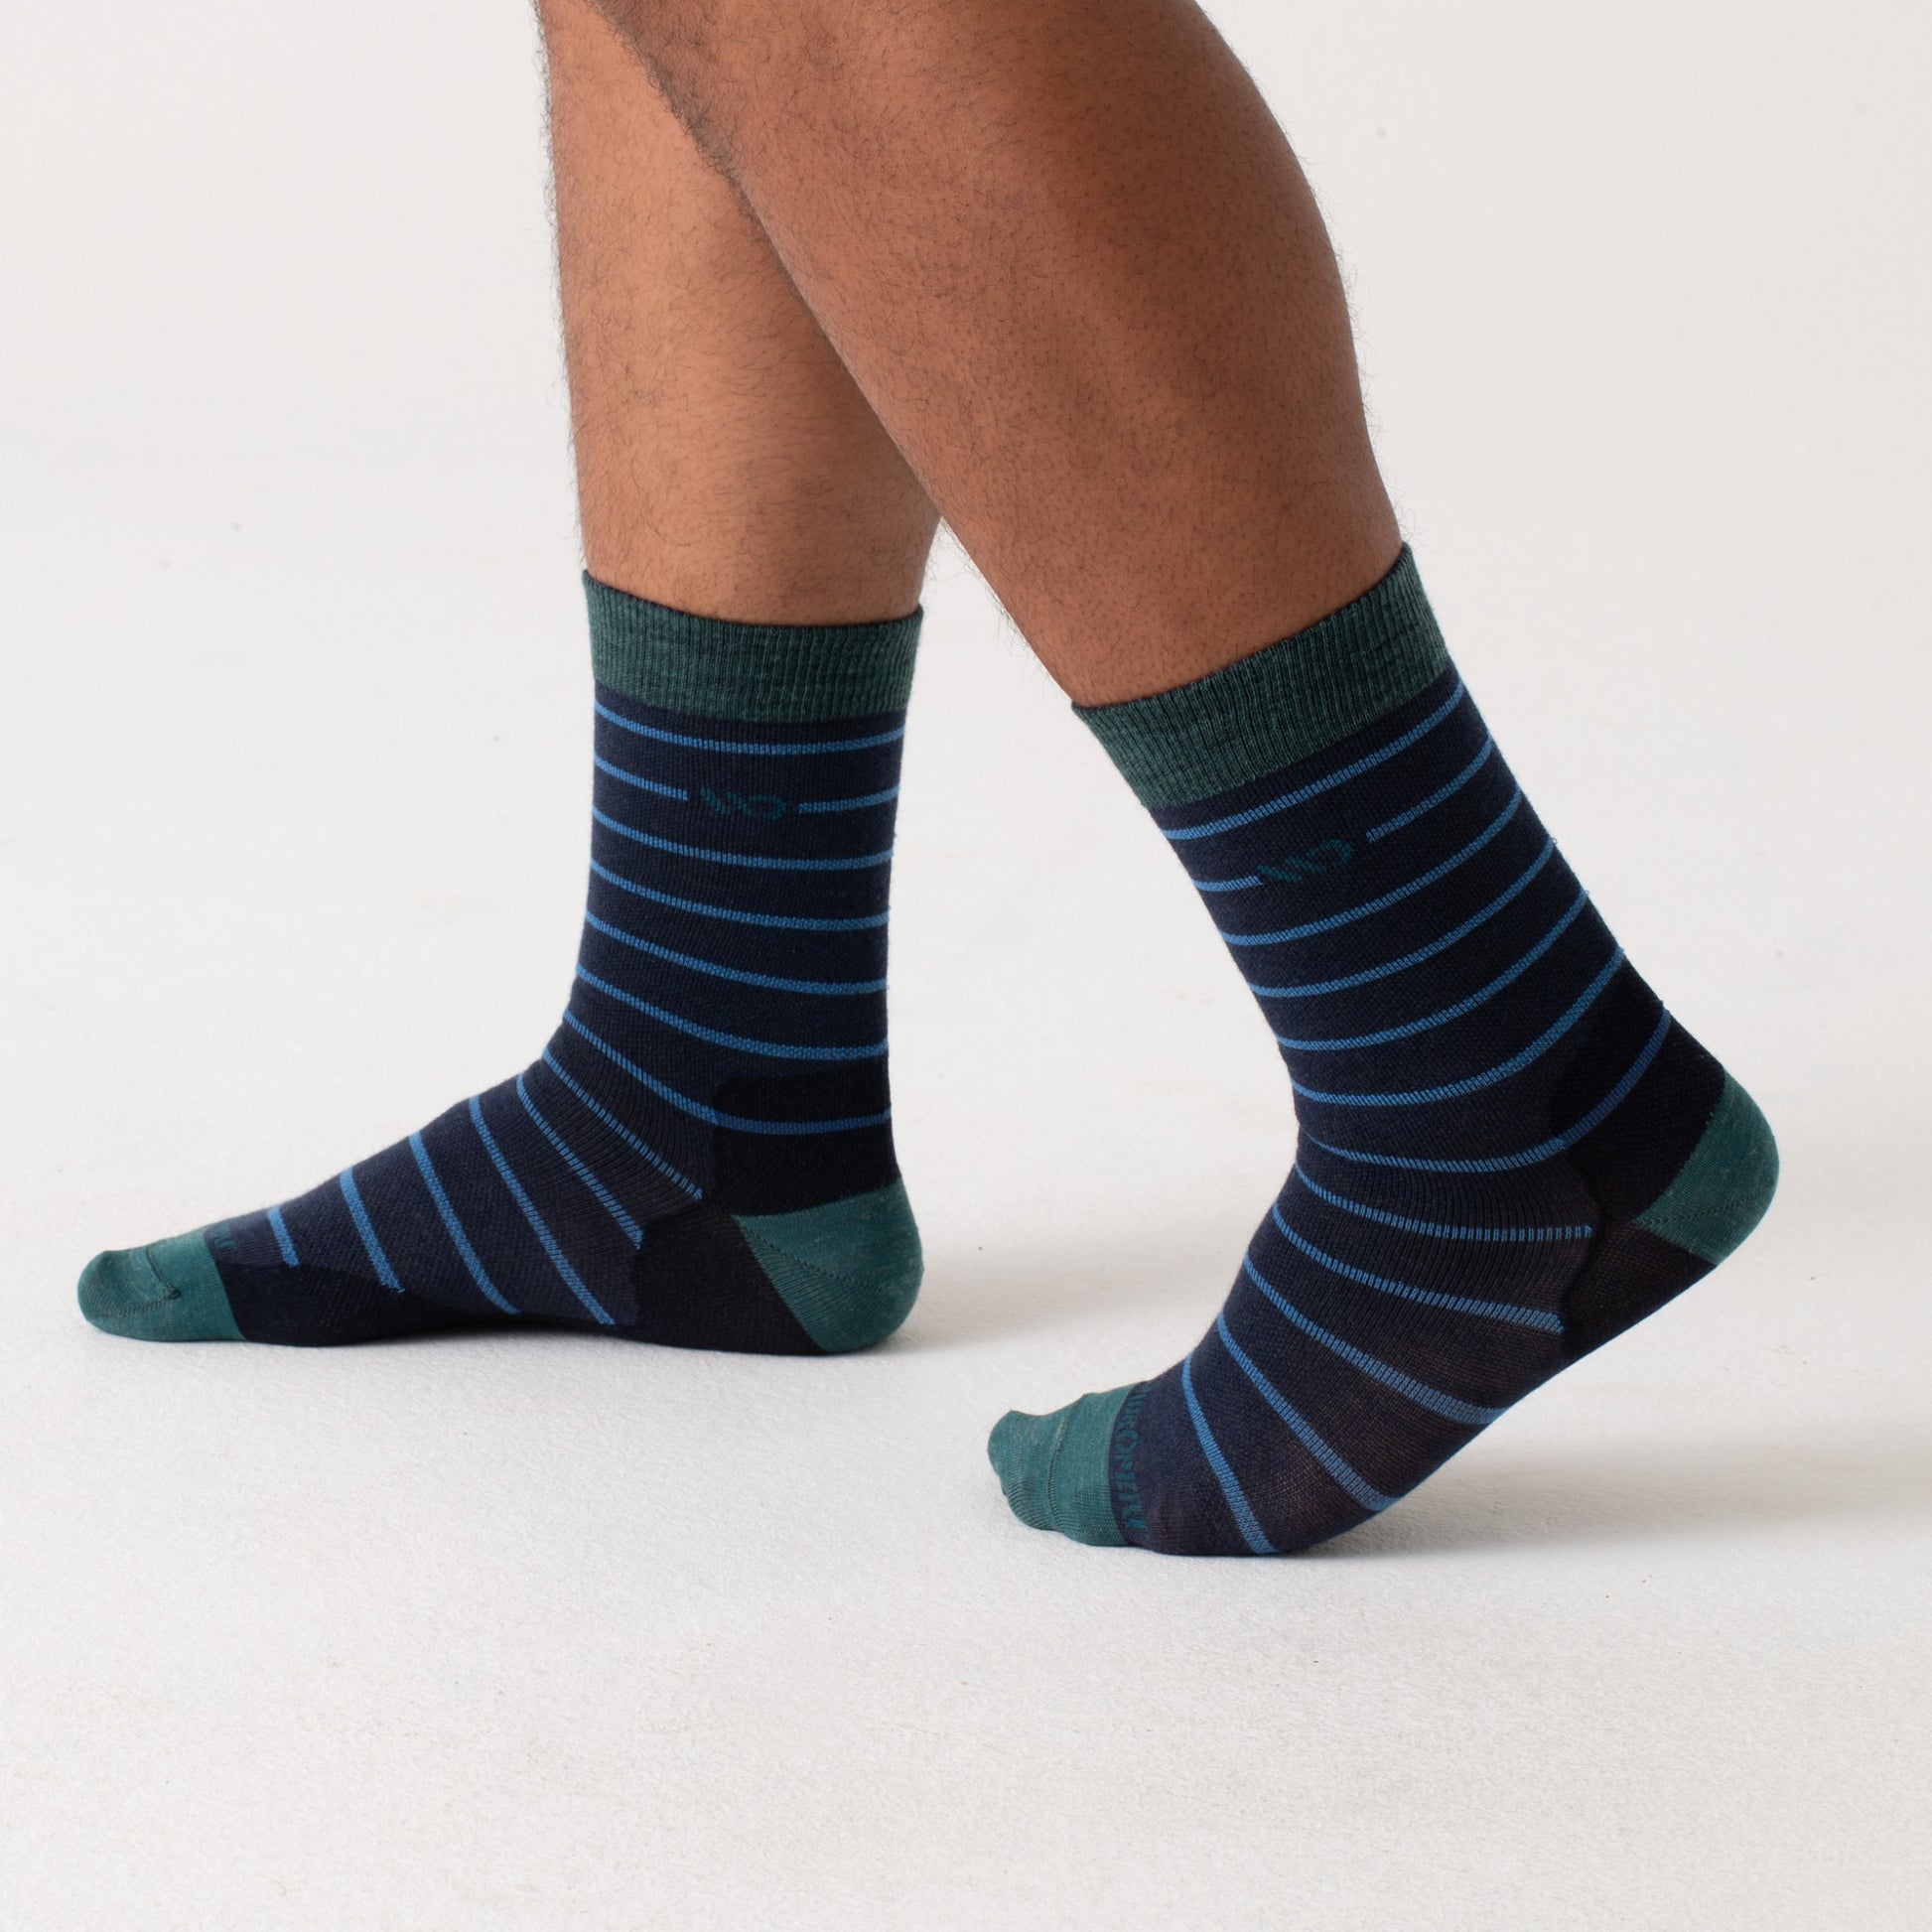 Crew sock with dark teal heel/toe and logo, denim body and blue stripes --Denim